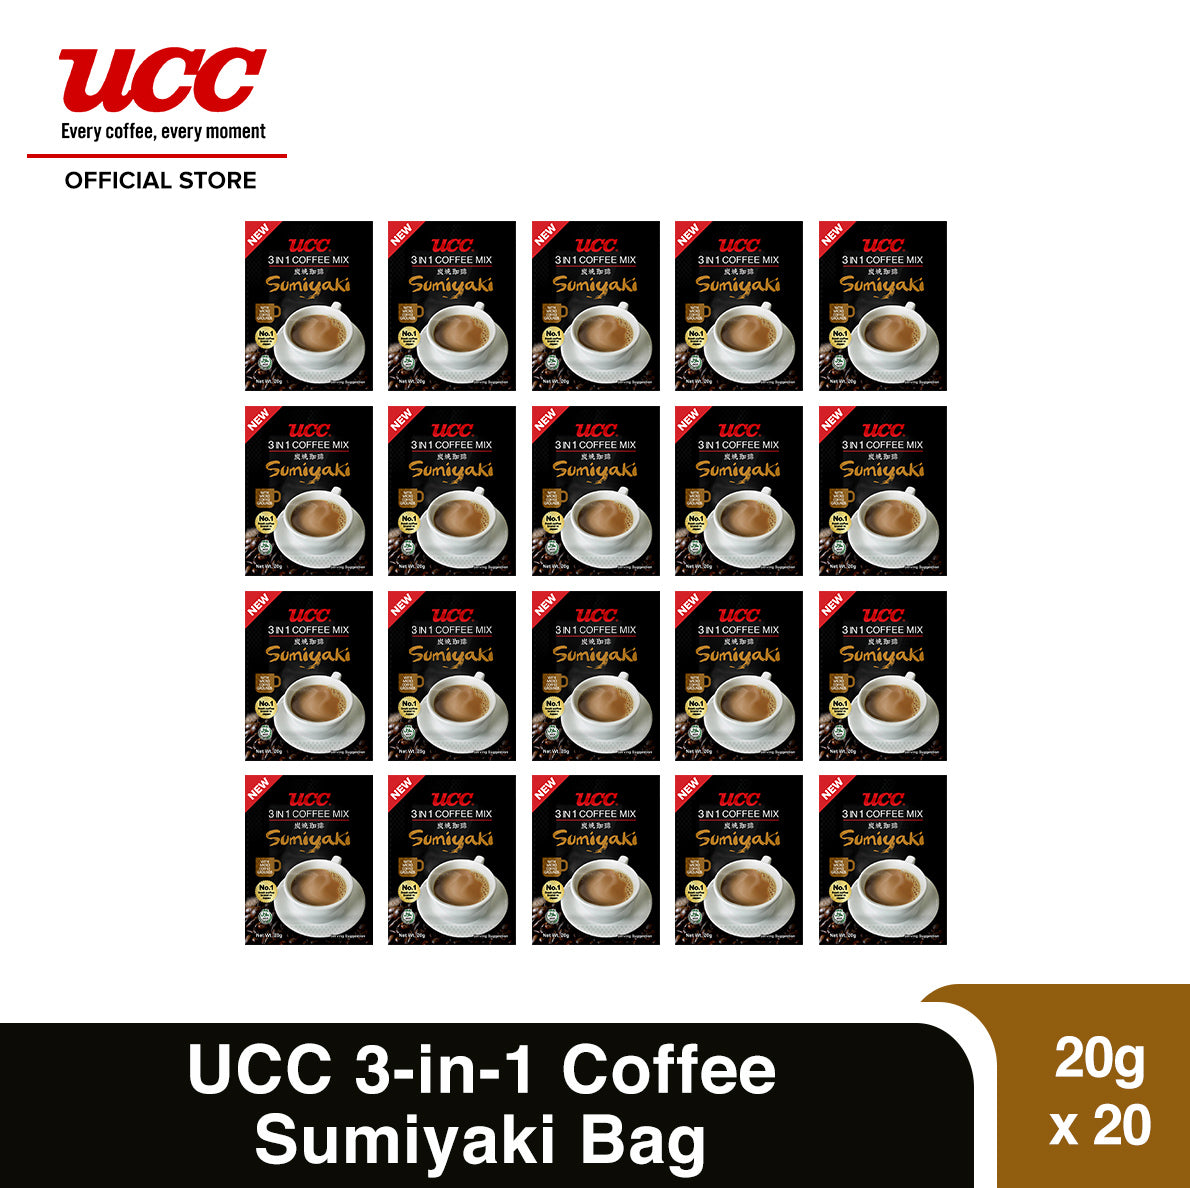 UCC 3-in-1 Sumiyaki Coffee Bag (20g x 20)